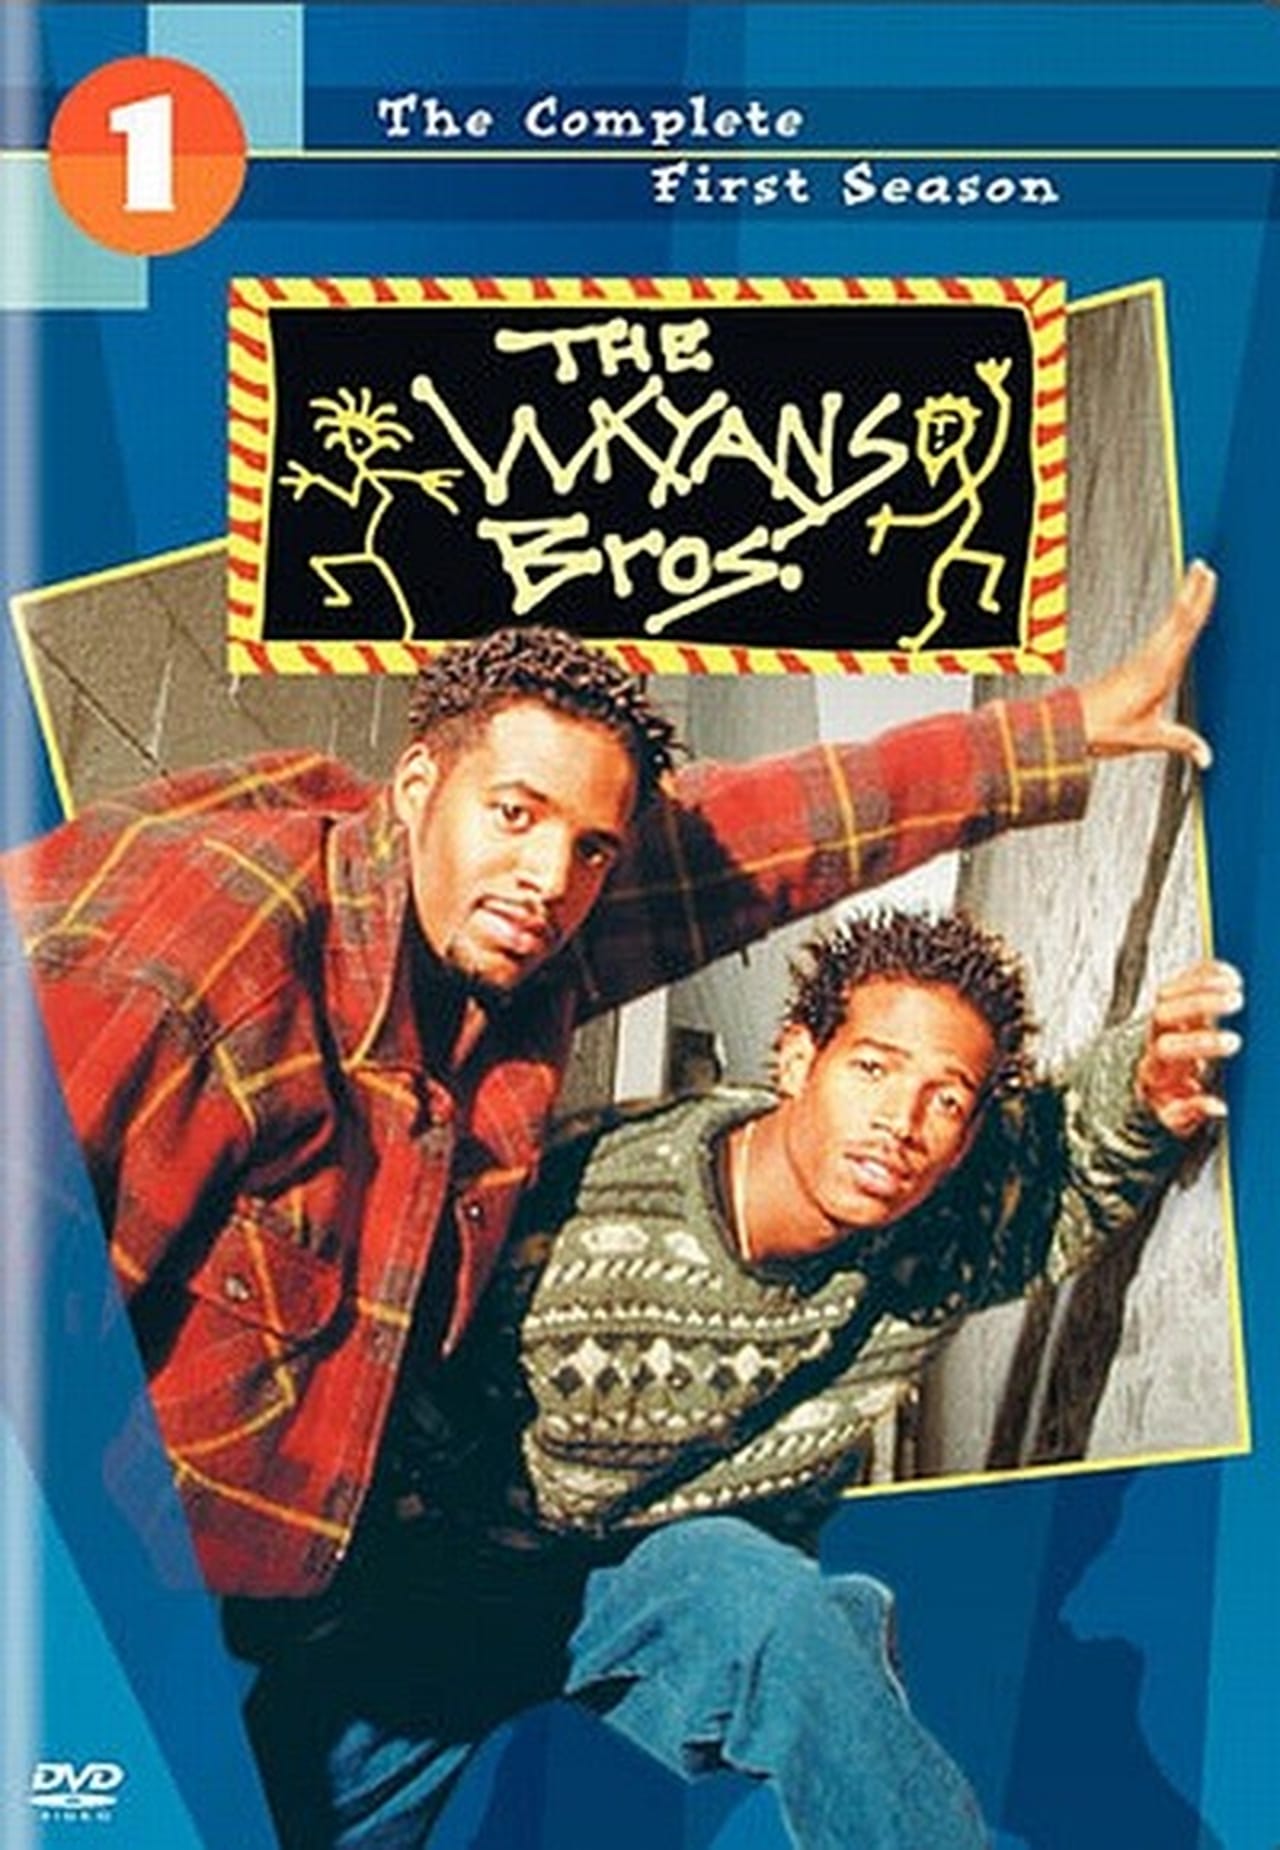 The Wayans Bros. (1995)